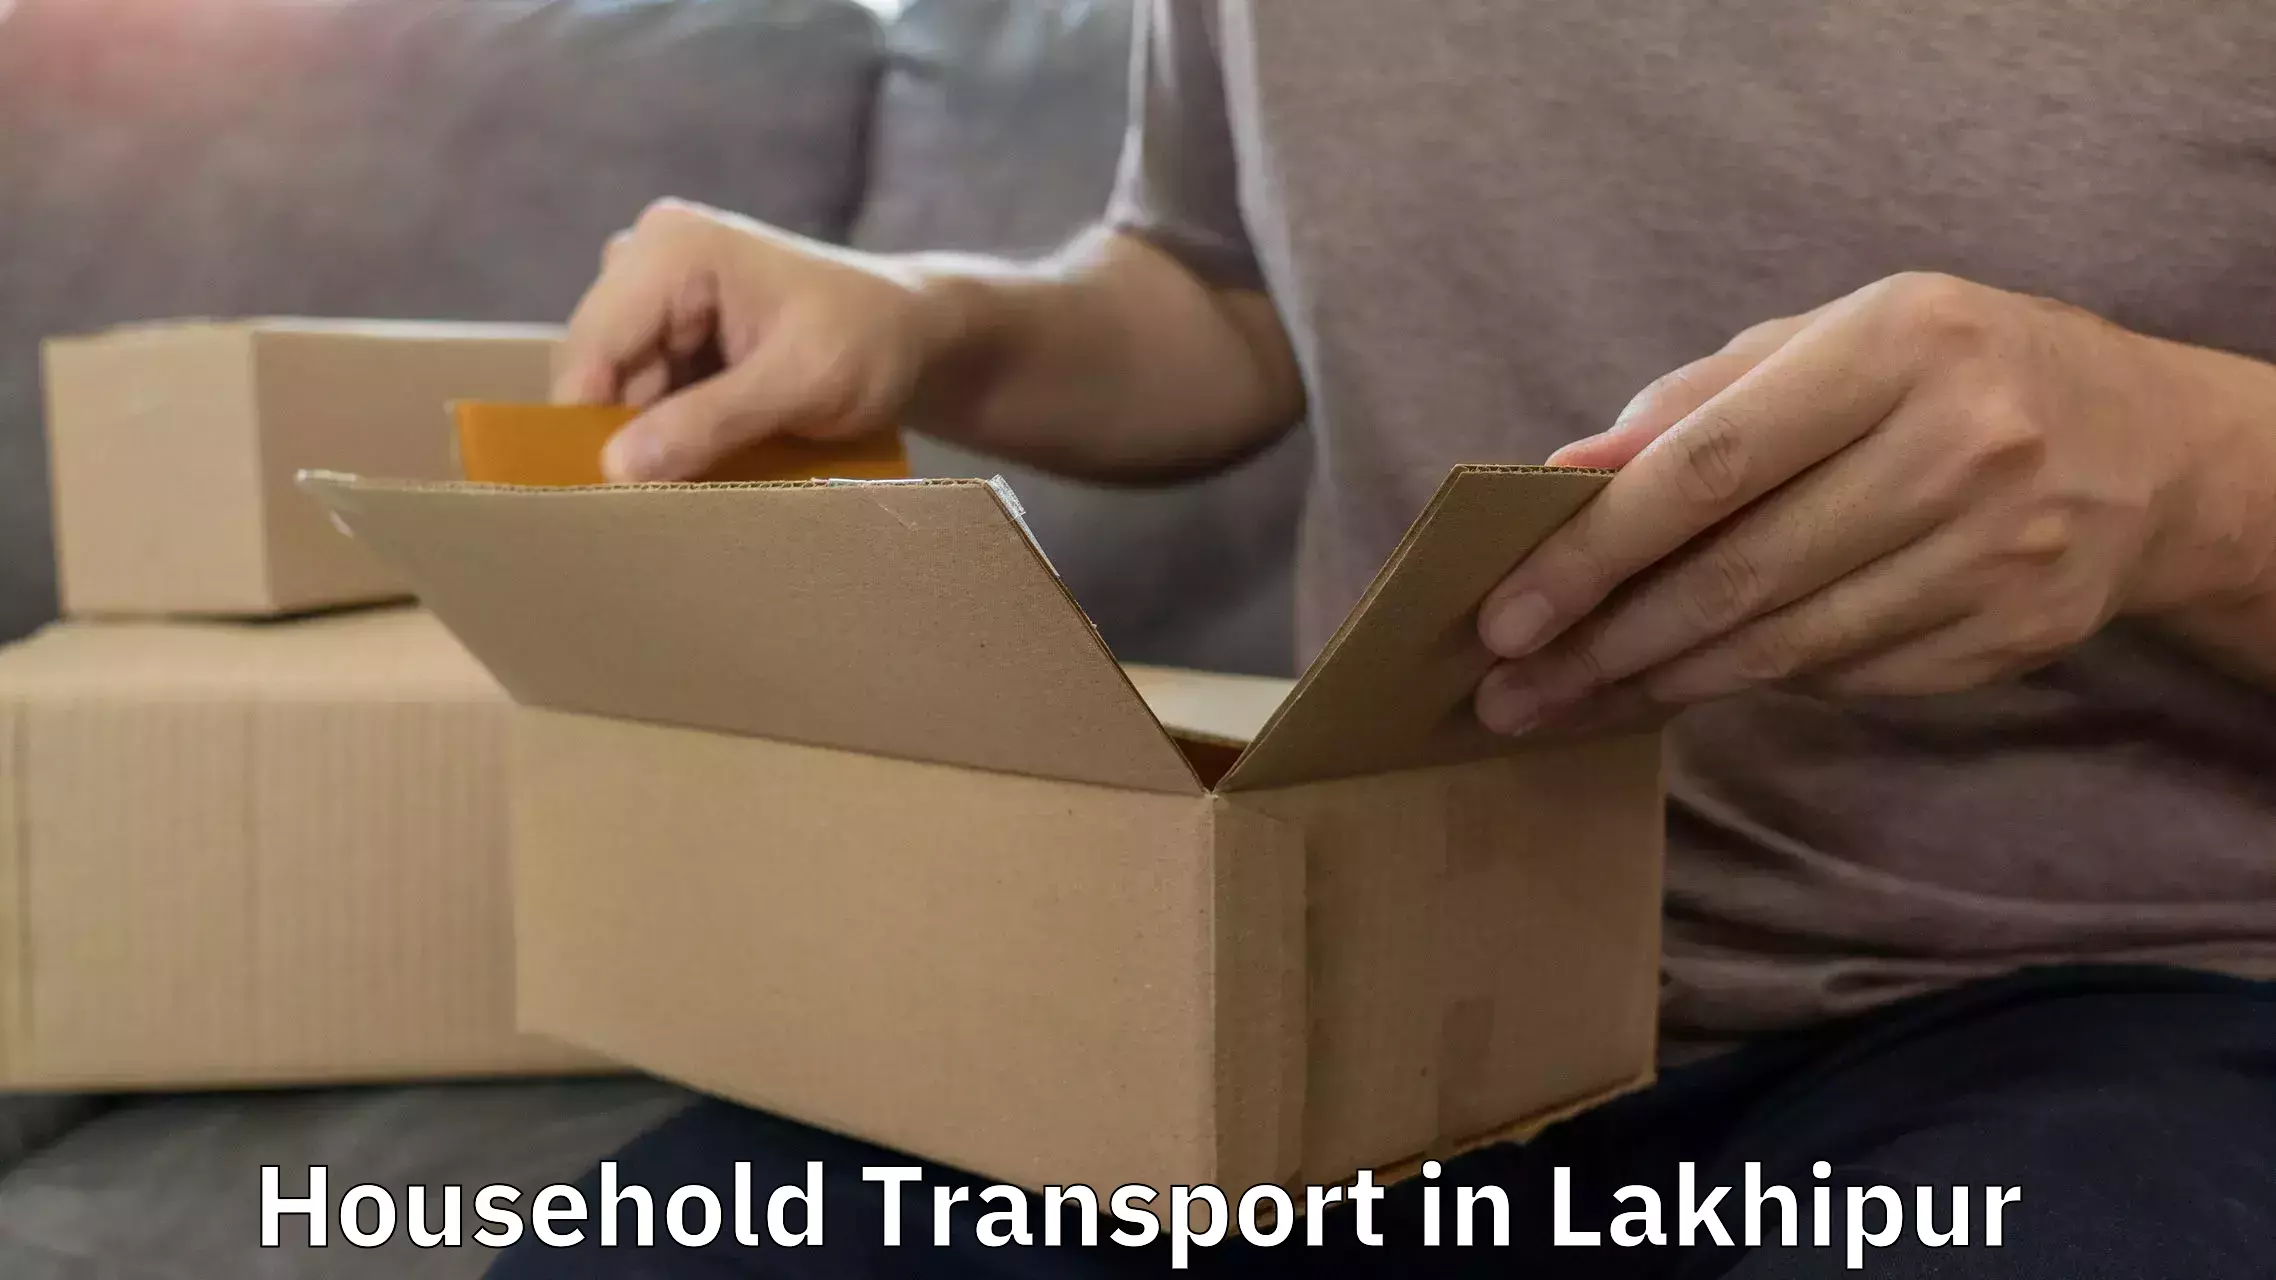 Full-service furniture transport in Lakhipur